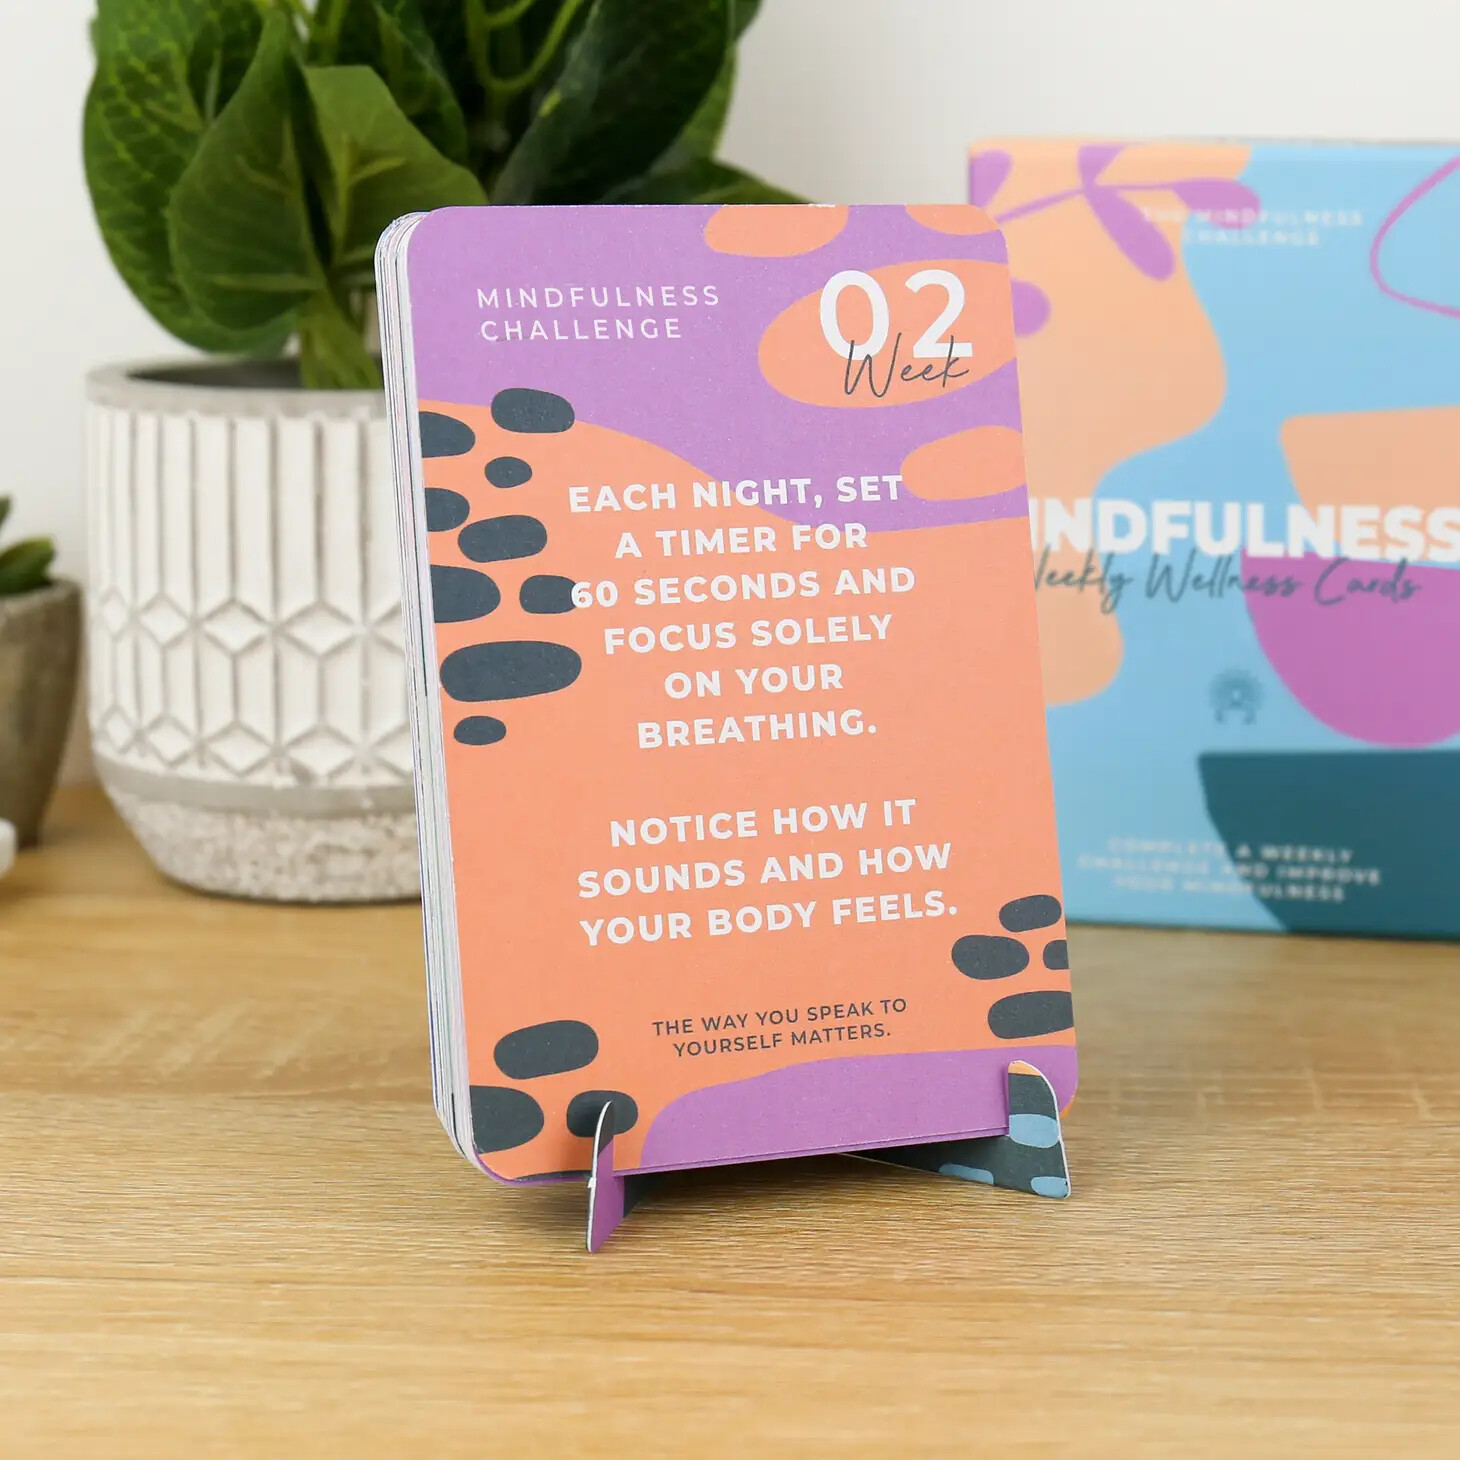 Mindfulness - Weekly Wellness Cards